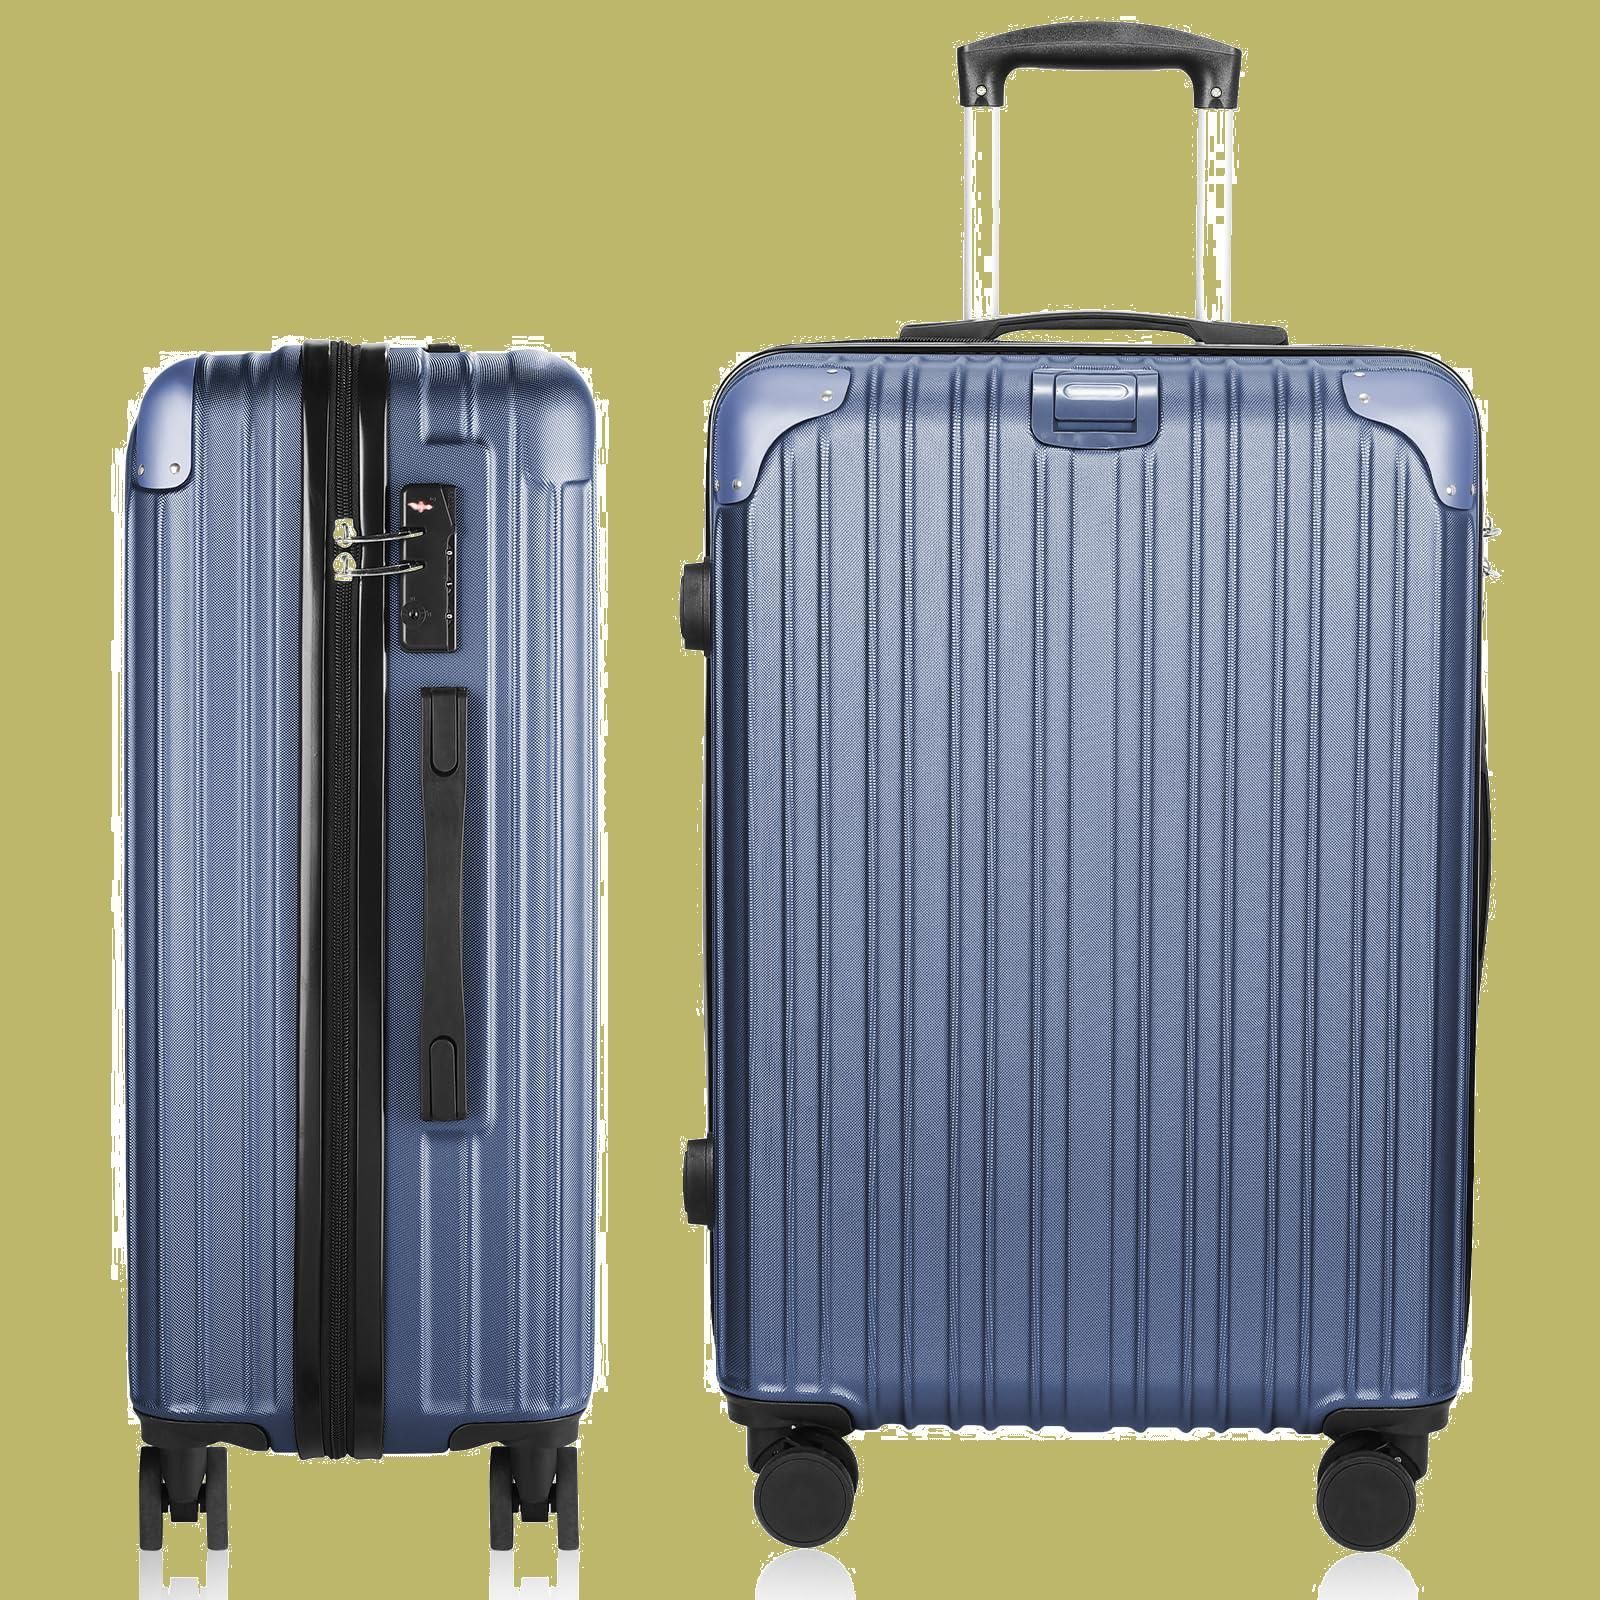 [TRIPJOYY] スーツケース キャリーケース キャリーバッグ luggage suitcase TSAロック 軽量  360度回転静音ダブルキャスター ファスナー式 旅行 ビジネス 出張 (XLサイズ、7泊以上、ブルー)